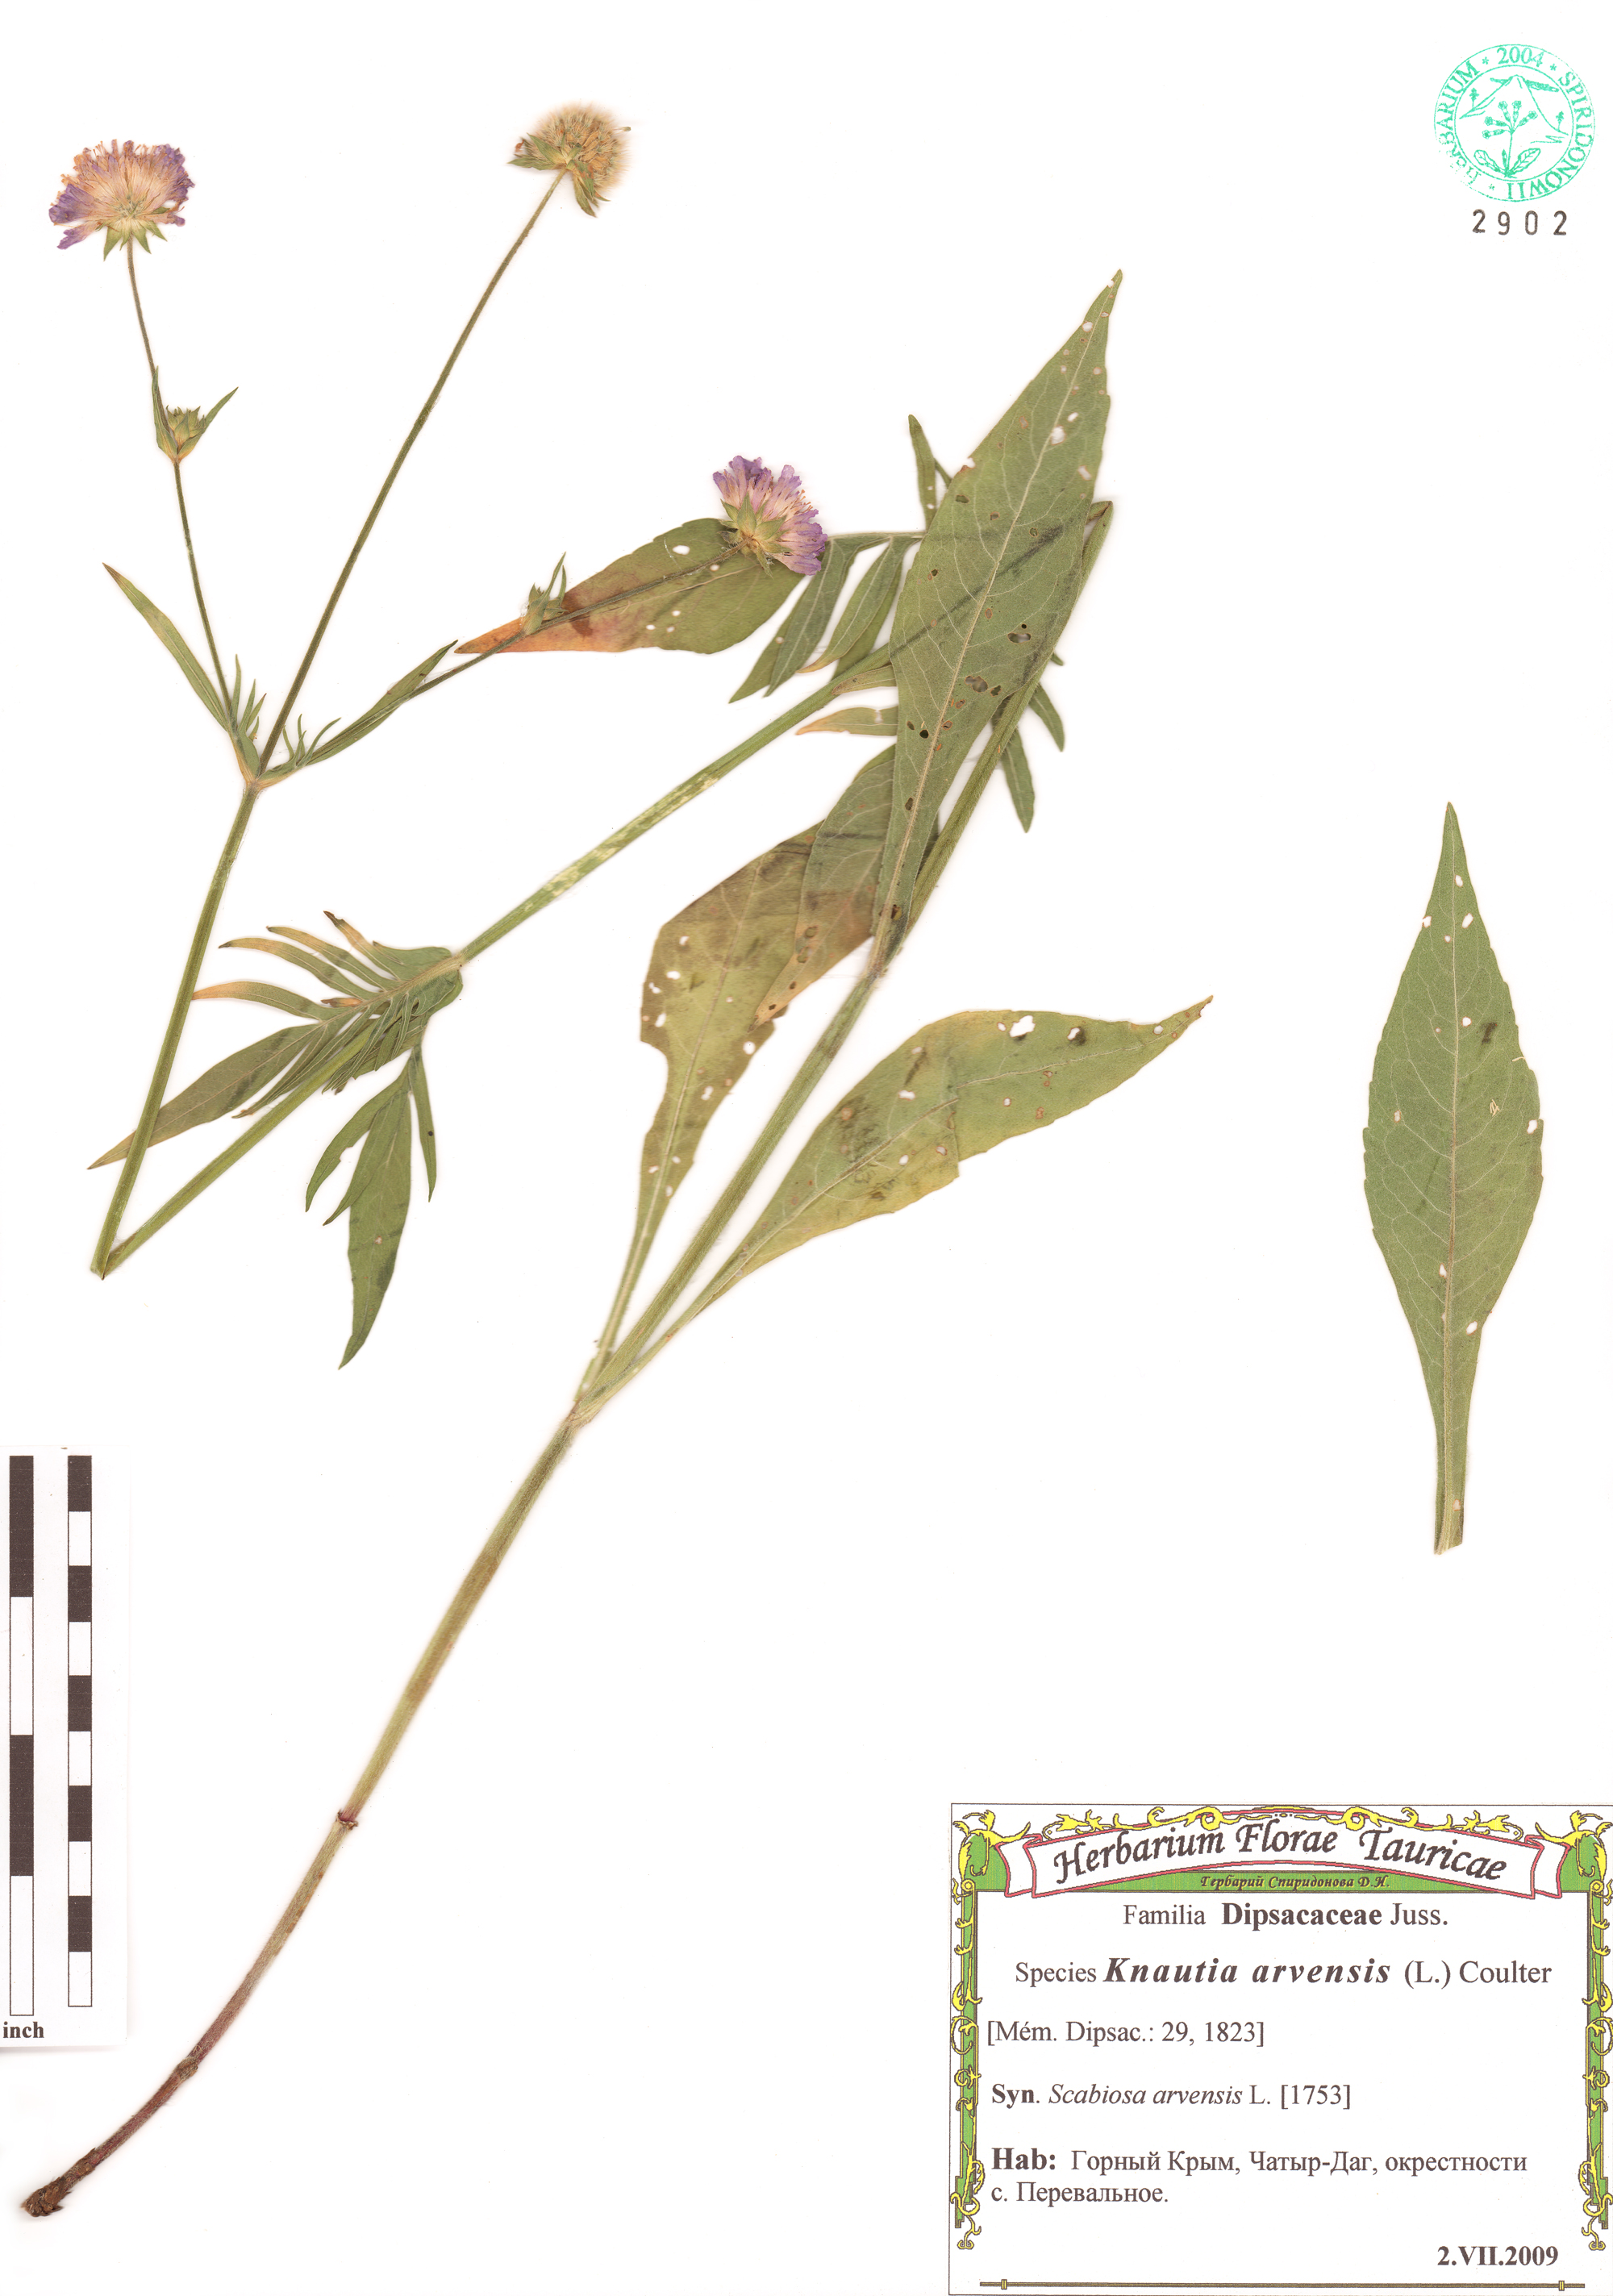 Knautia arvensis (L.) Coulter